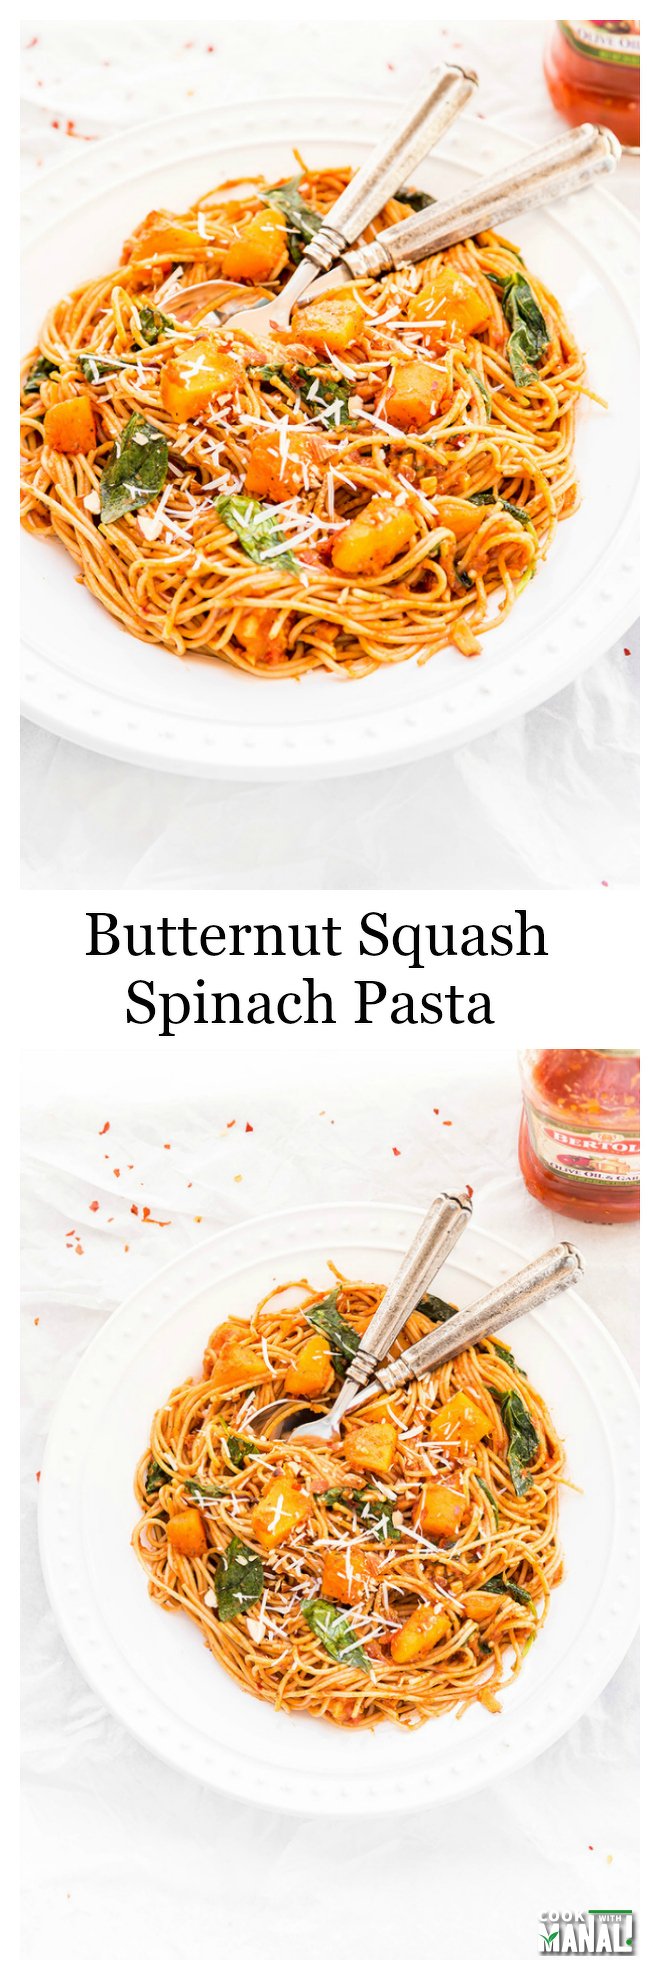 butternut-squash-spinach-pasta-collage